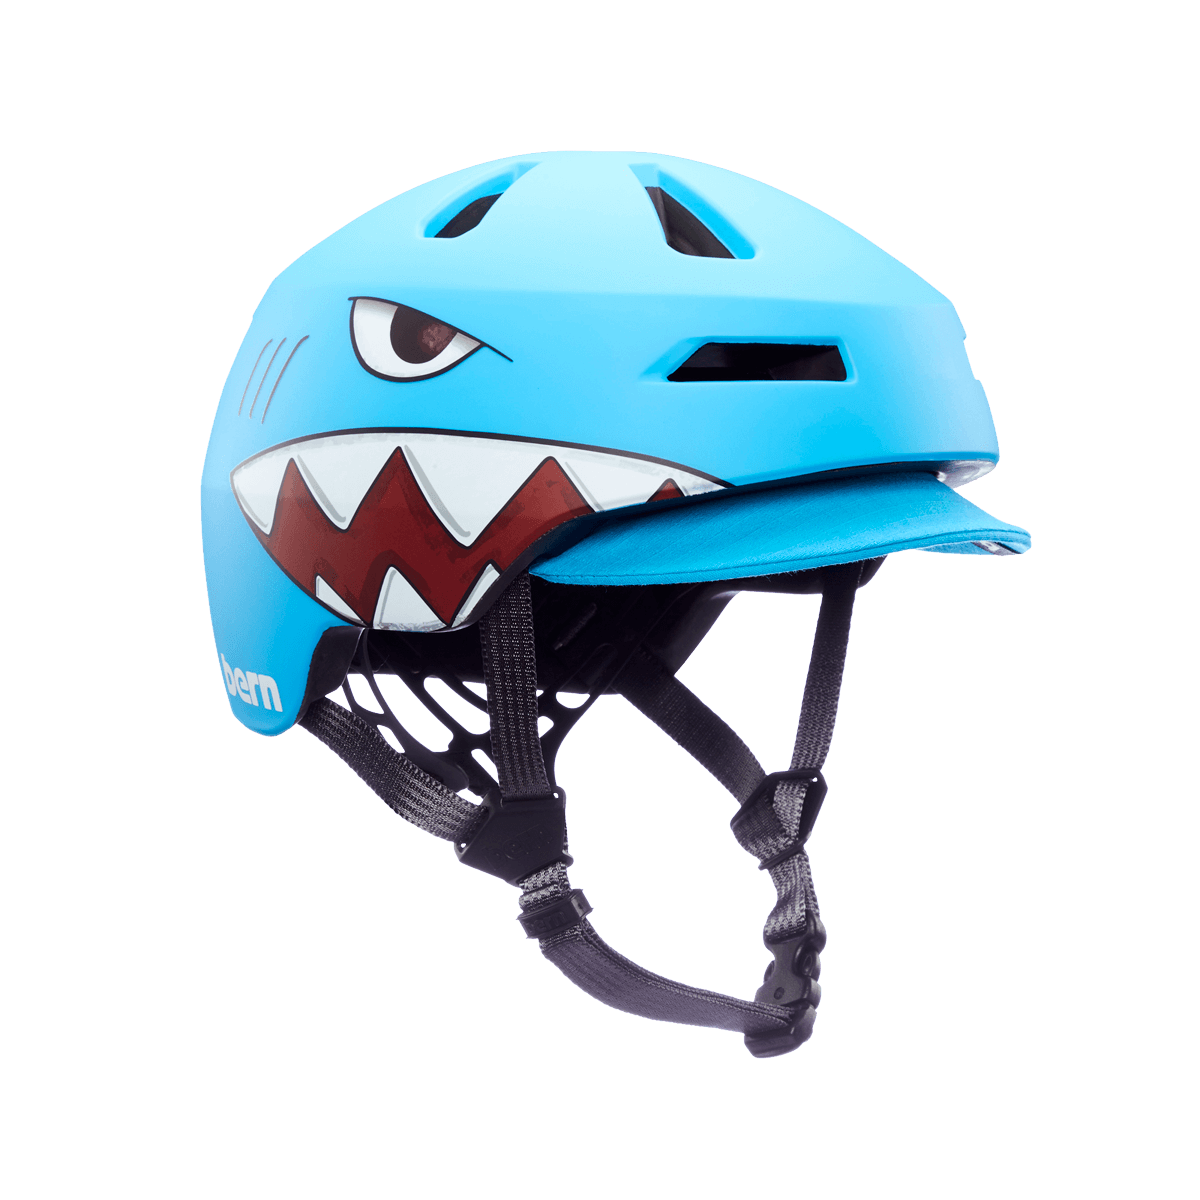 Nino 2.0 MIPS Bike Helmet (Barn Deal)